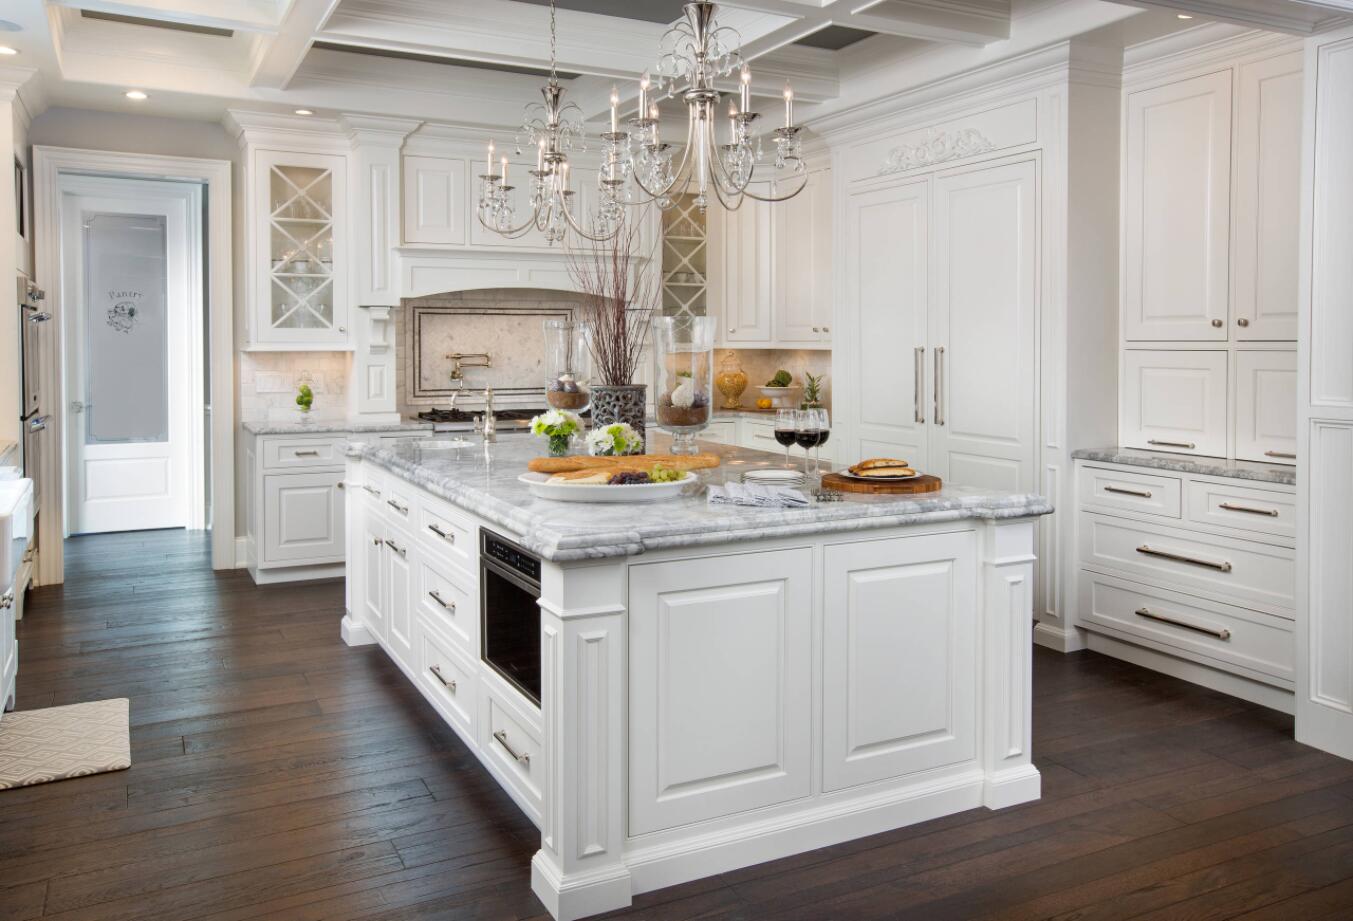 AisDecor wood and white kitchen cabinets wholesale-1